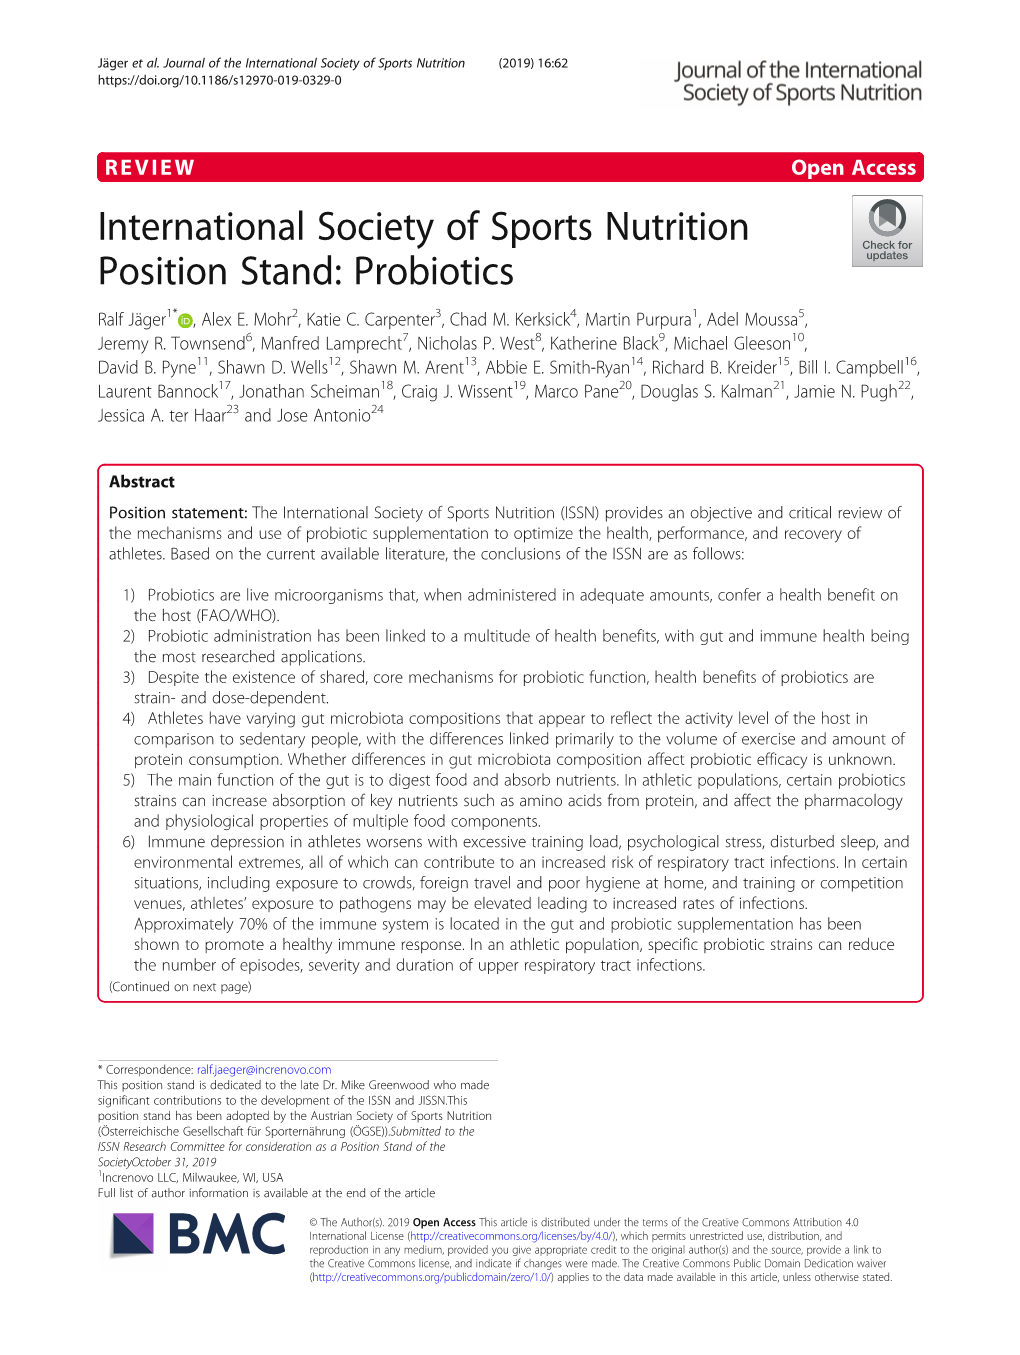 International Society of Sports Nutrition Position Stand: Probiotics Ralf Jäger1* , Alex E